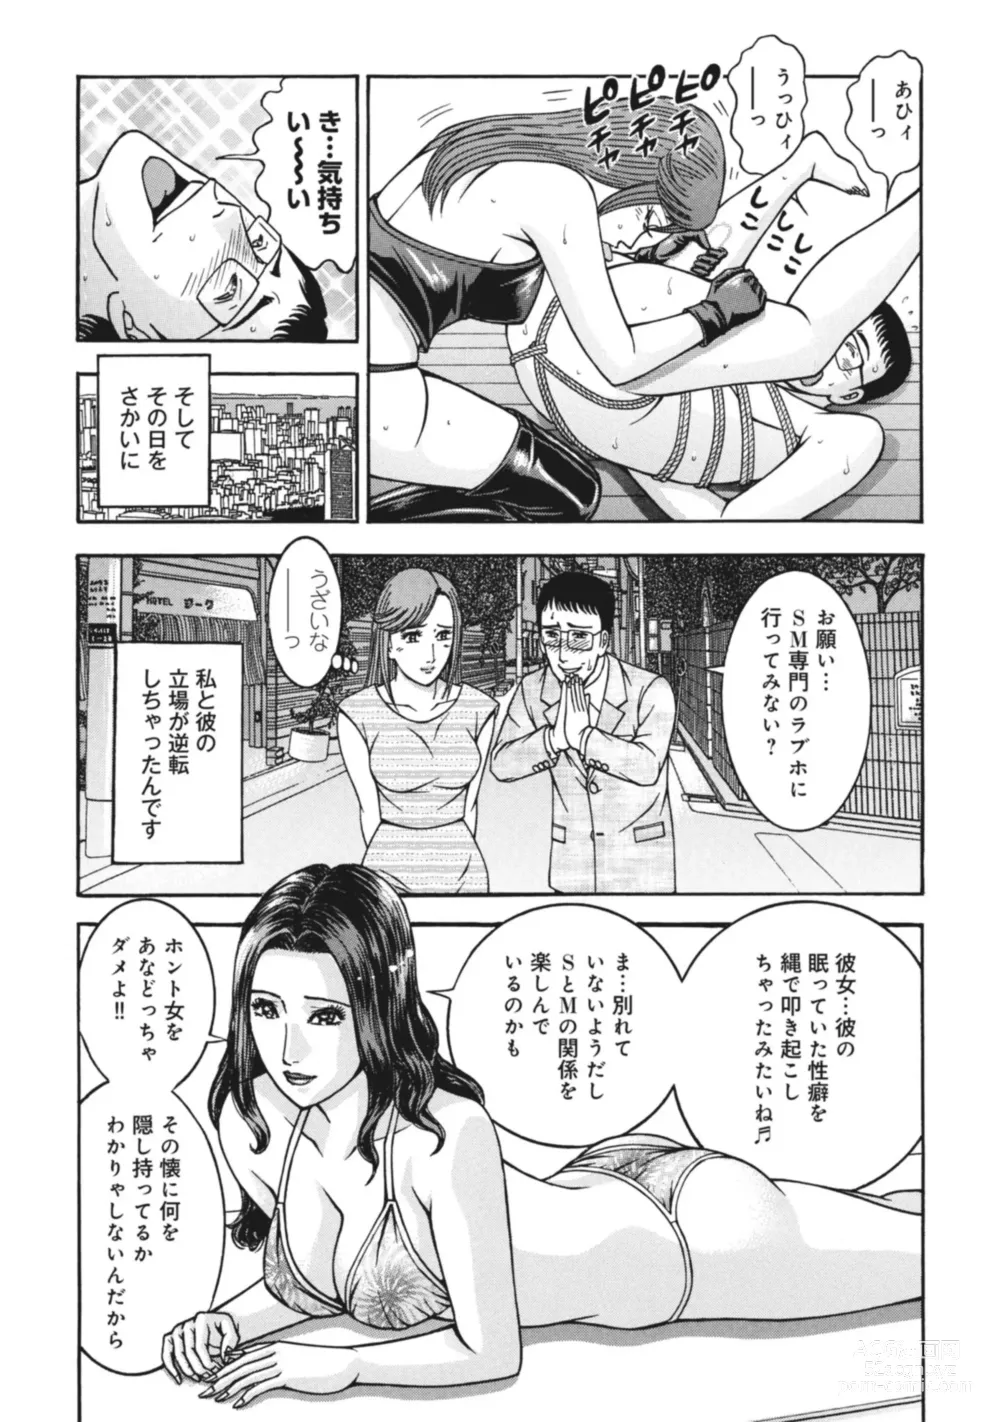 Page 14 of manga Renai Kaunserā Maki no Teisō Fairu 1